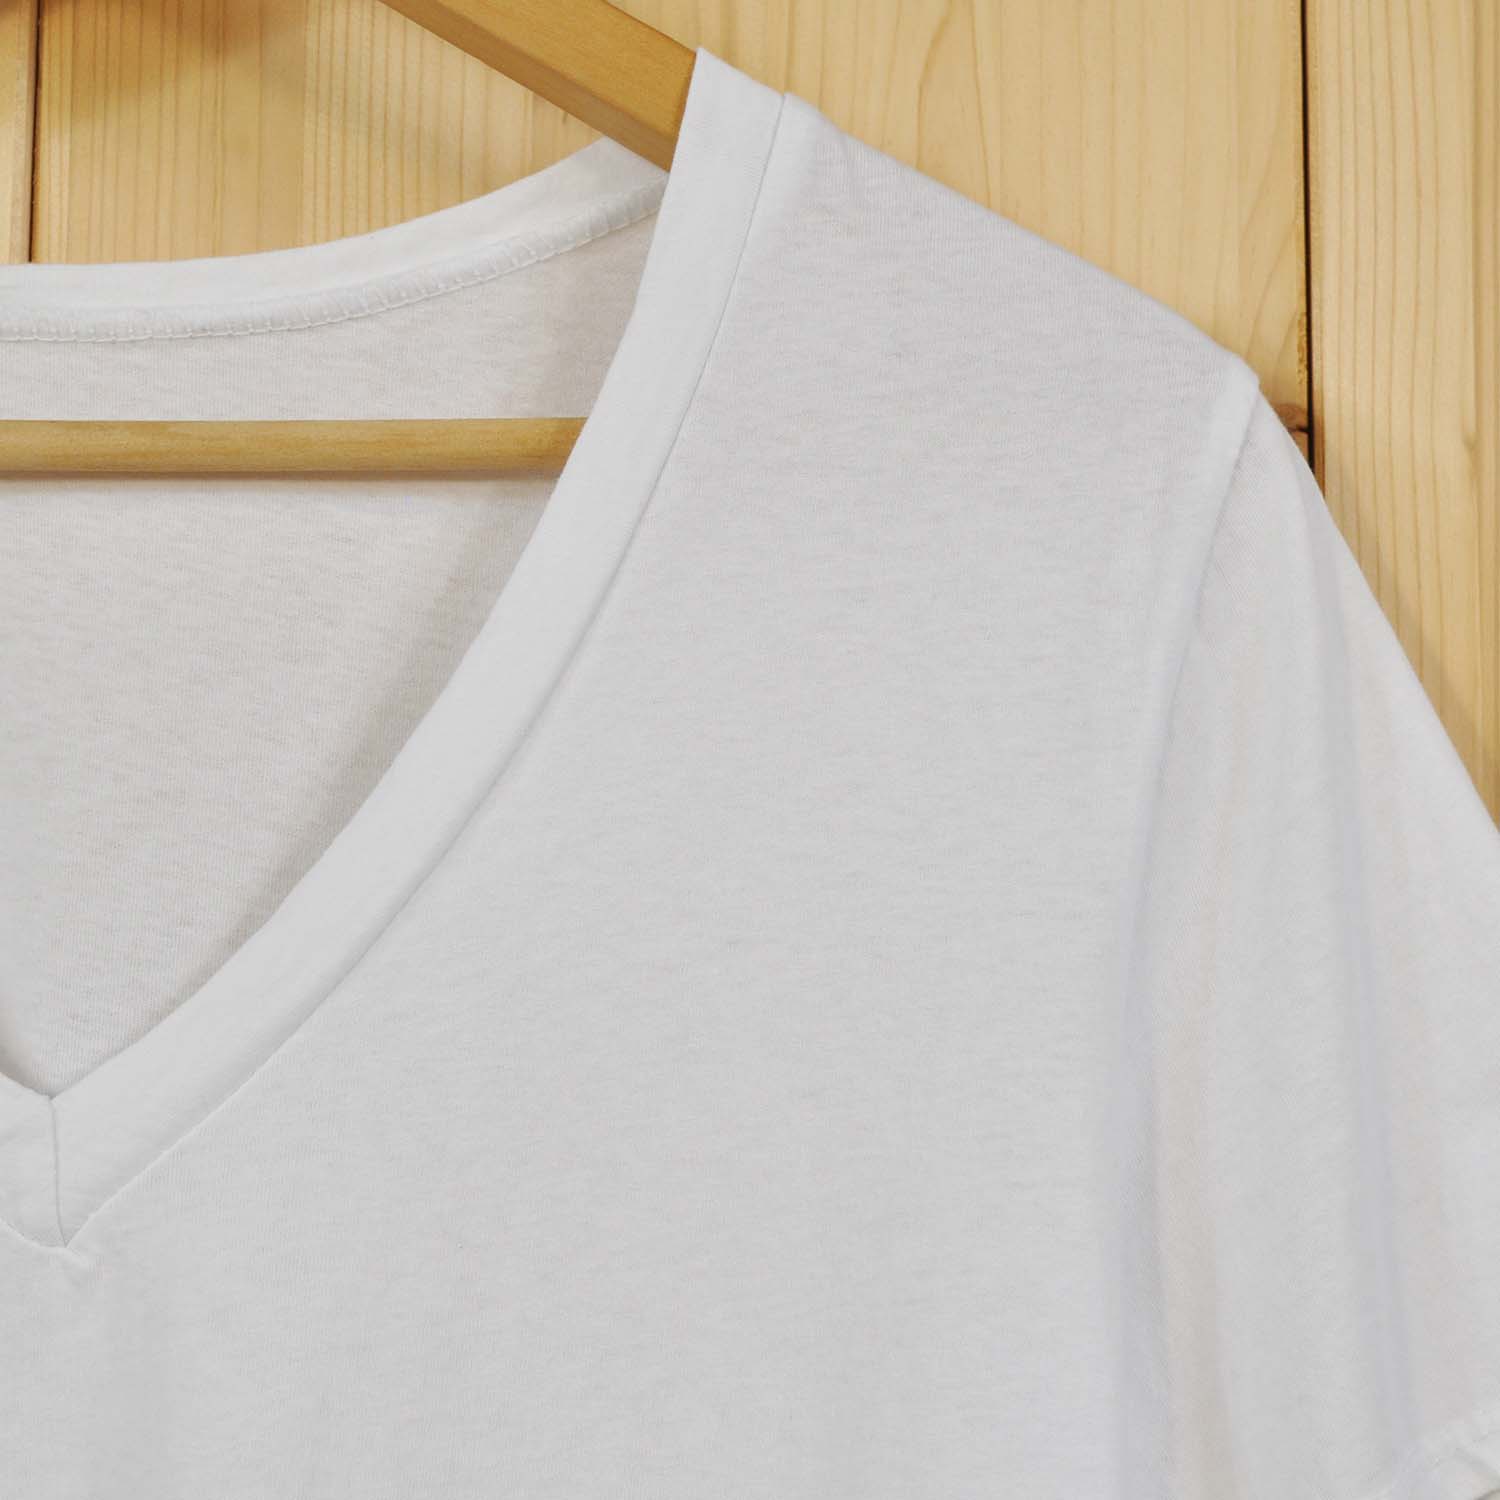 Camiseta pico básica blanca